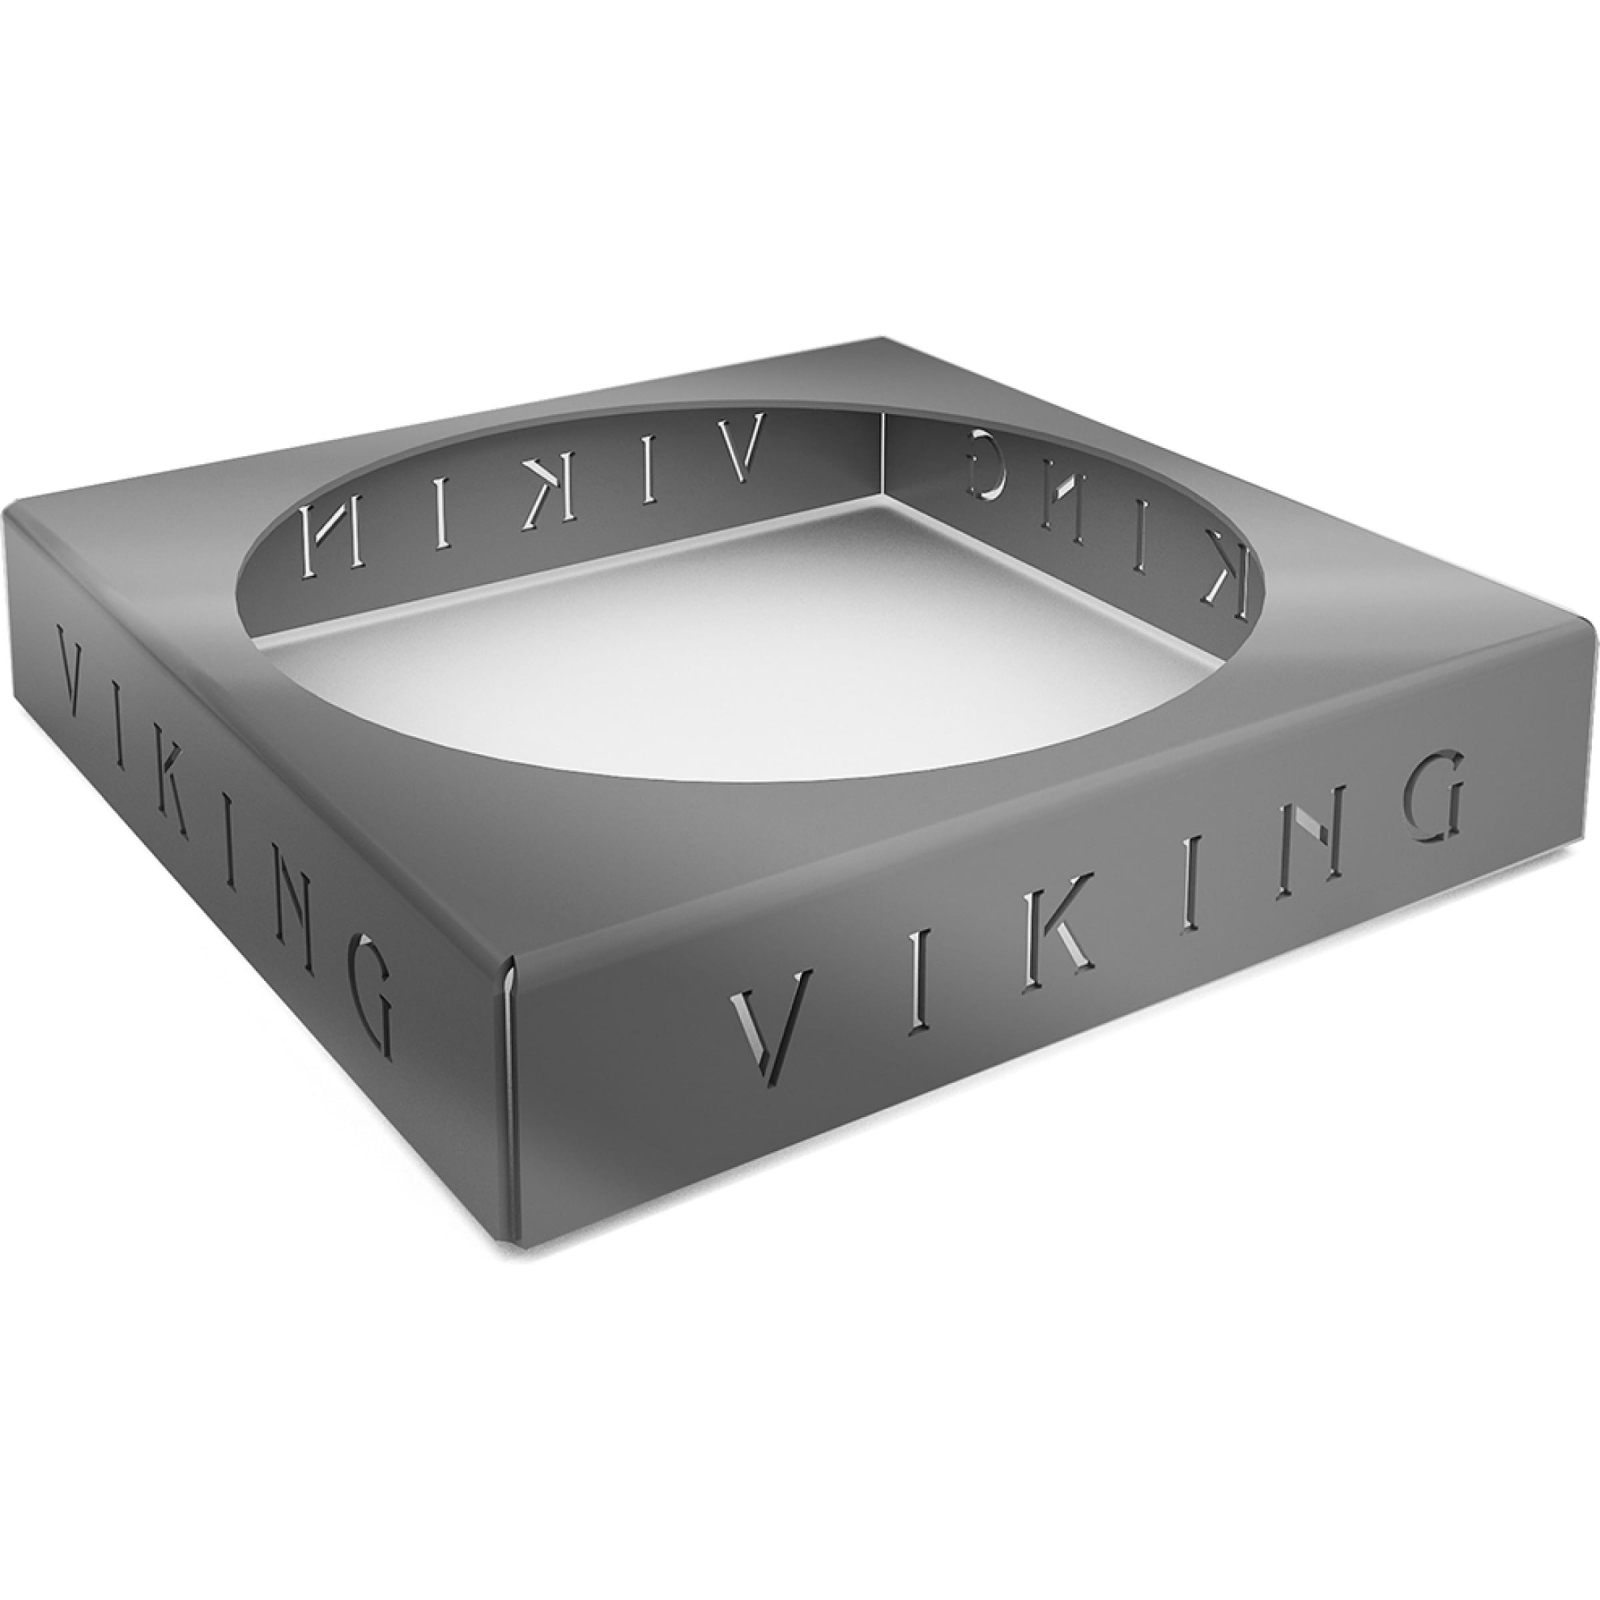 Подставка под казан Grillux для VikinG подставка под казан grillux для viking xl